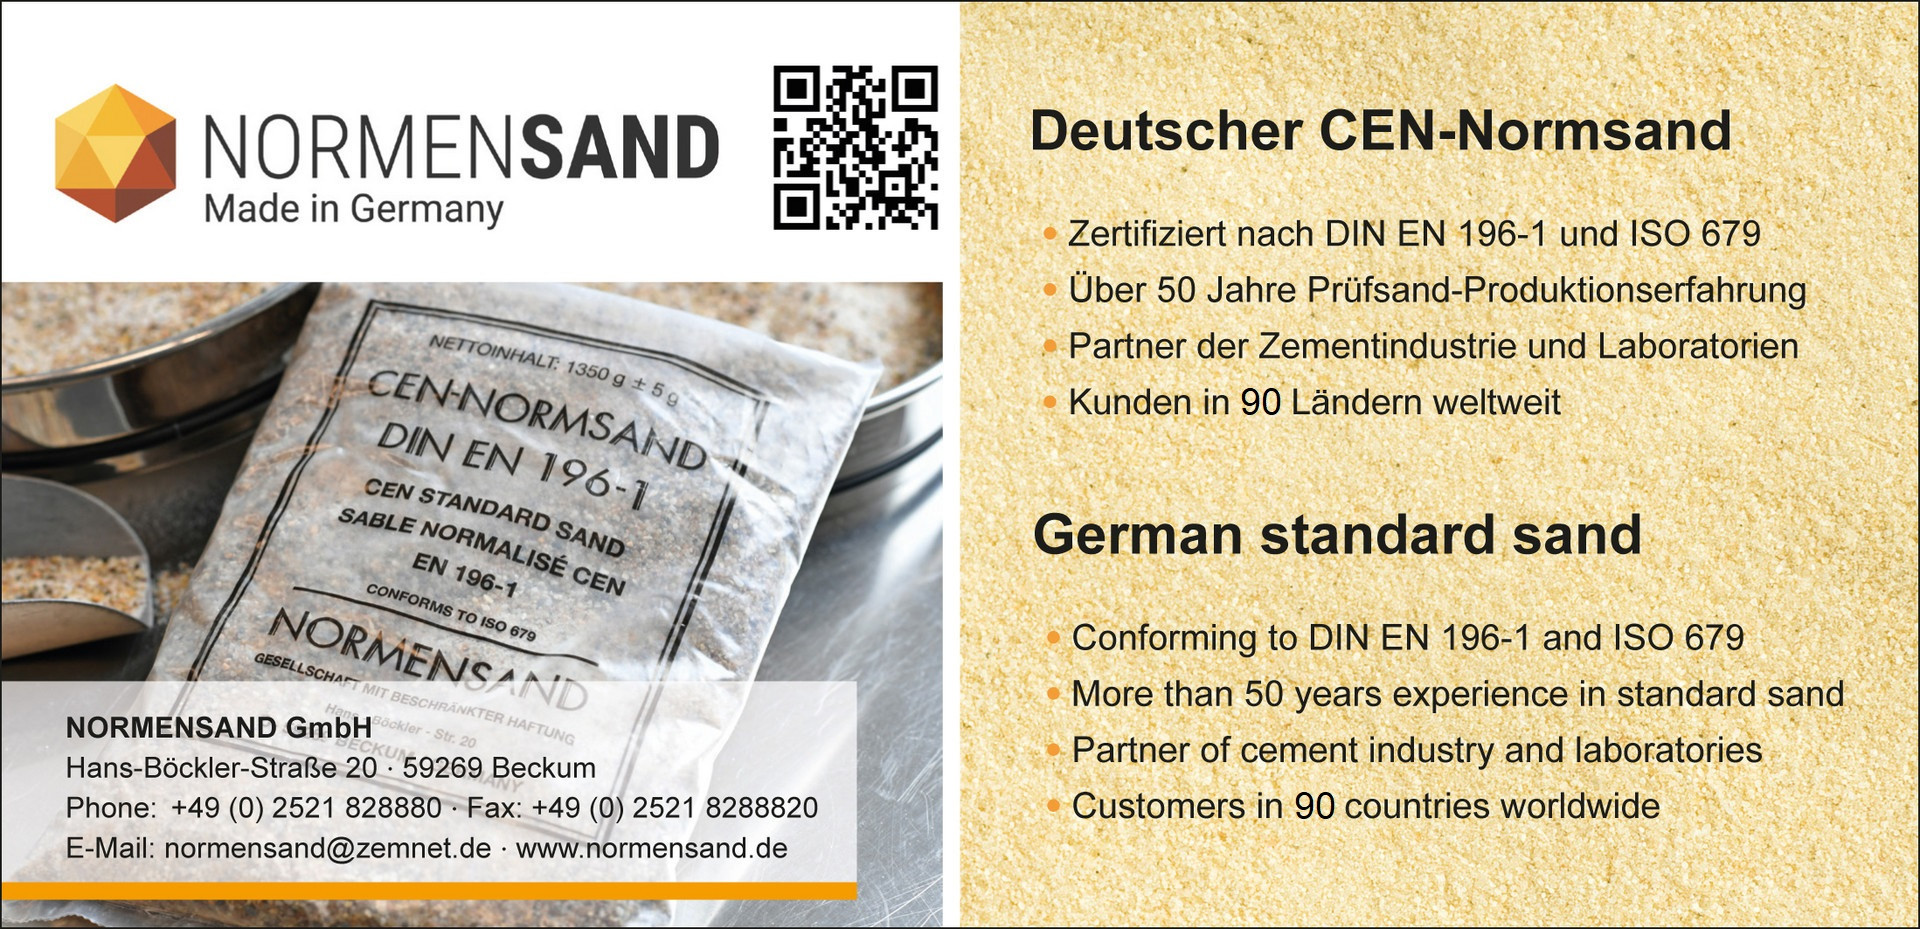 Normensand - German standard sand